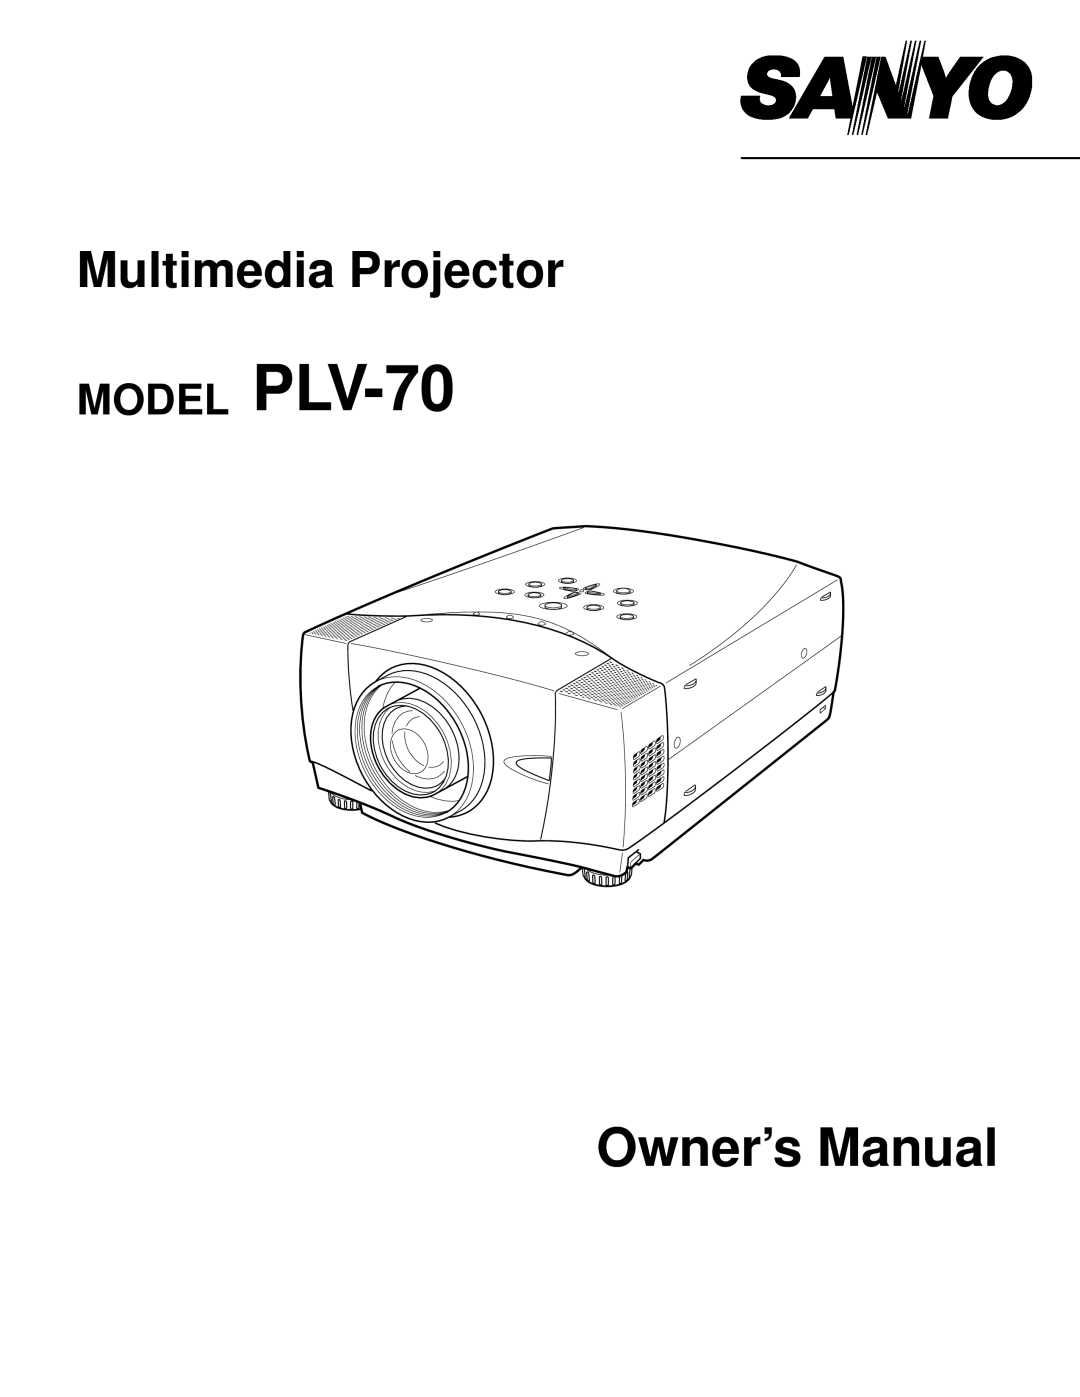 Sanyo owner manual Owner’s Manual, Multimedia Projector, MODEL PLV-70 